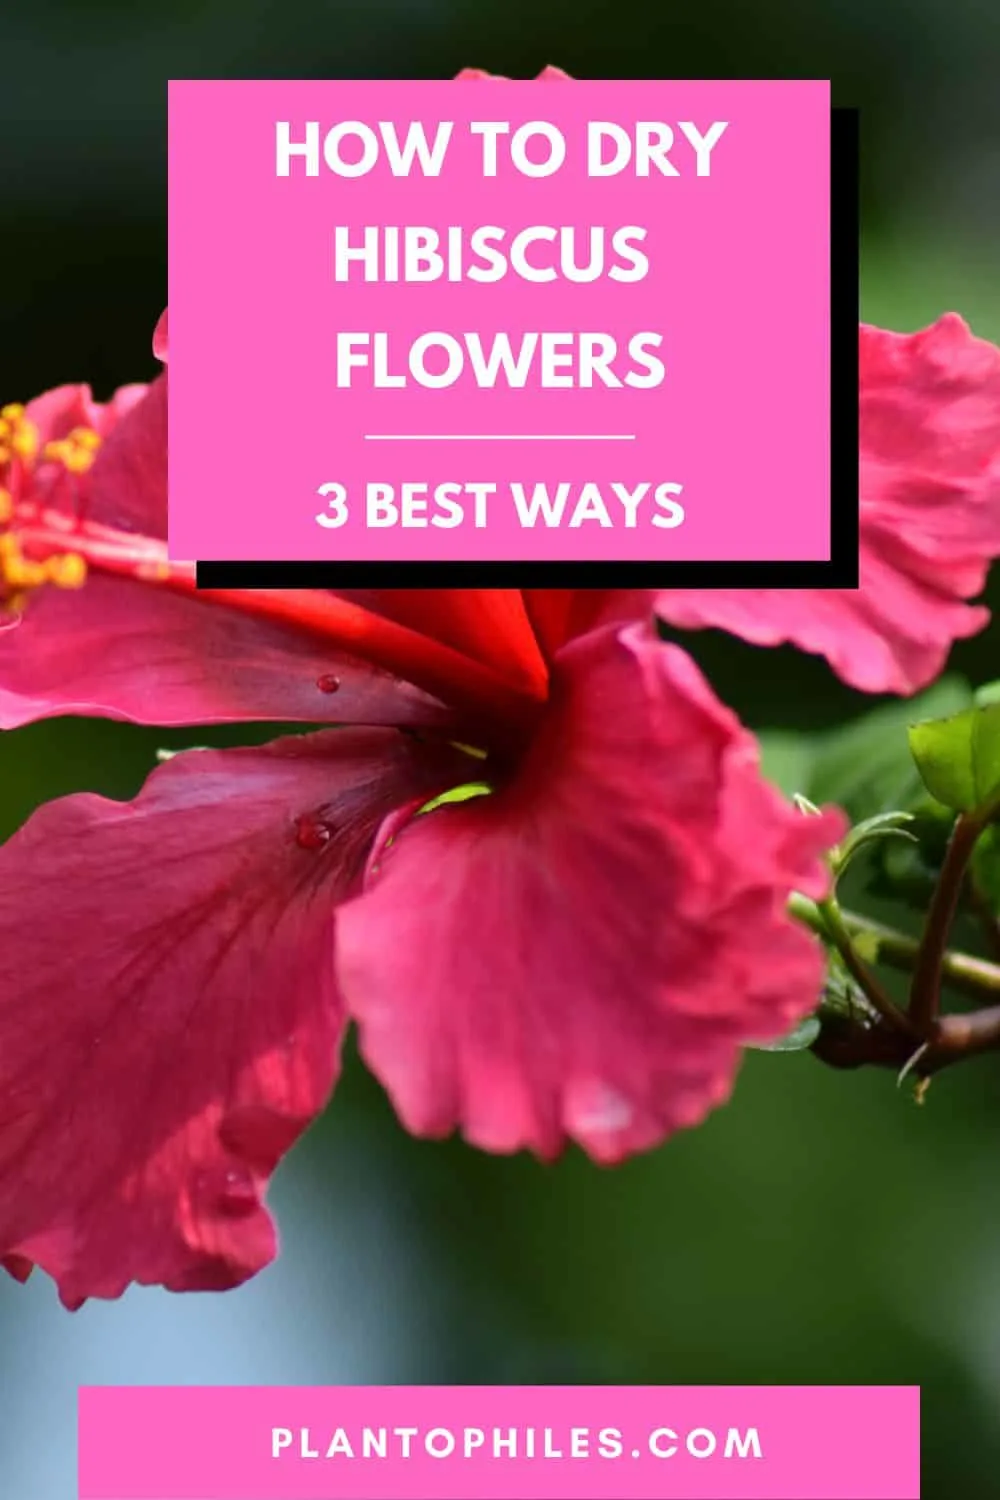 How to Dry Hibiscus Flowers - 3 Best Ways